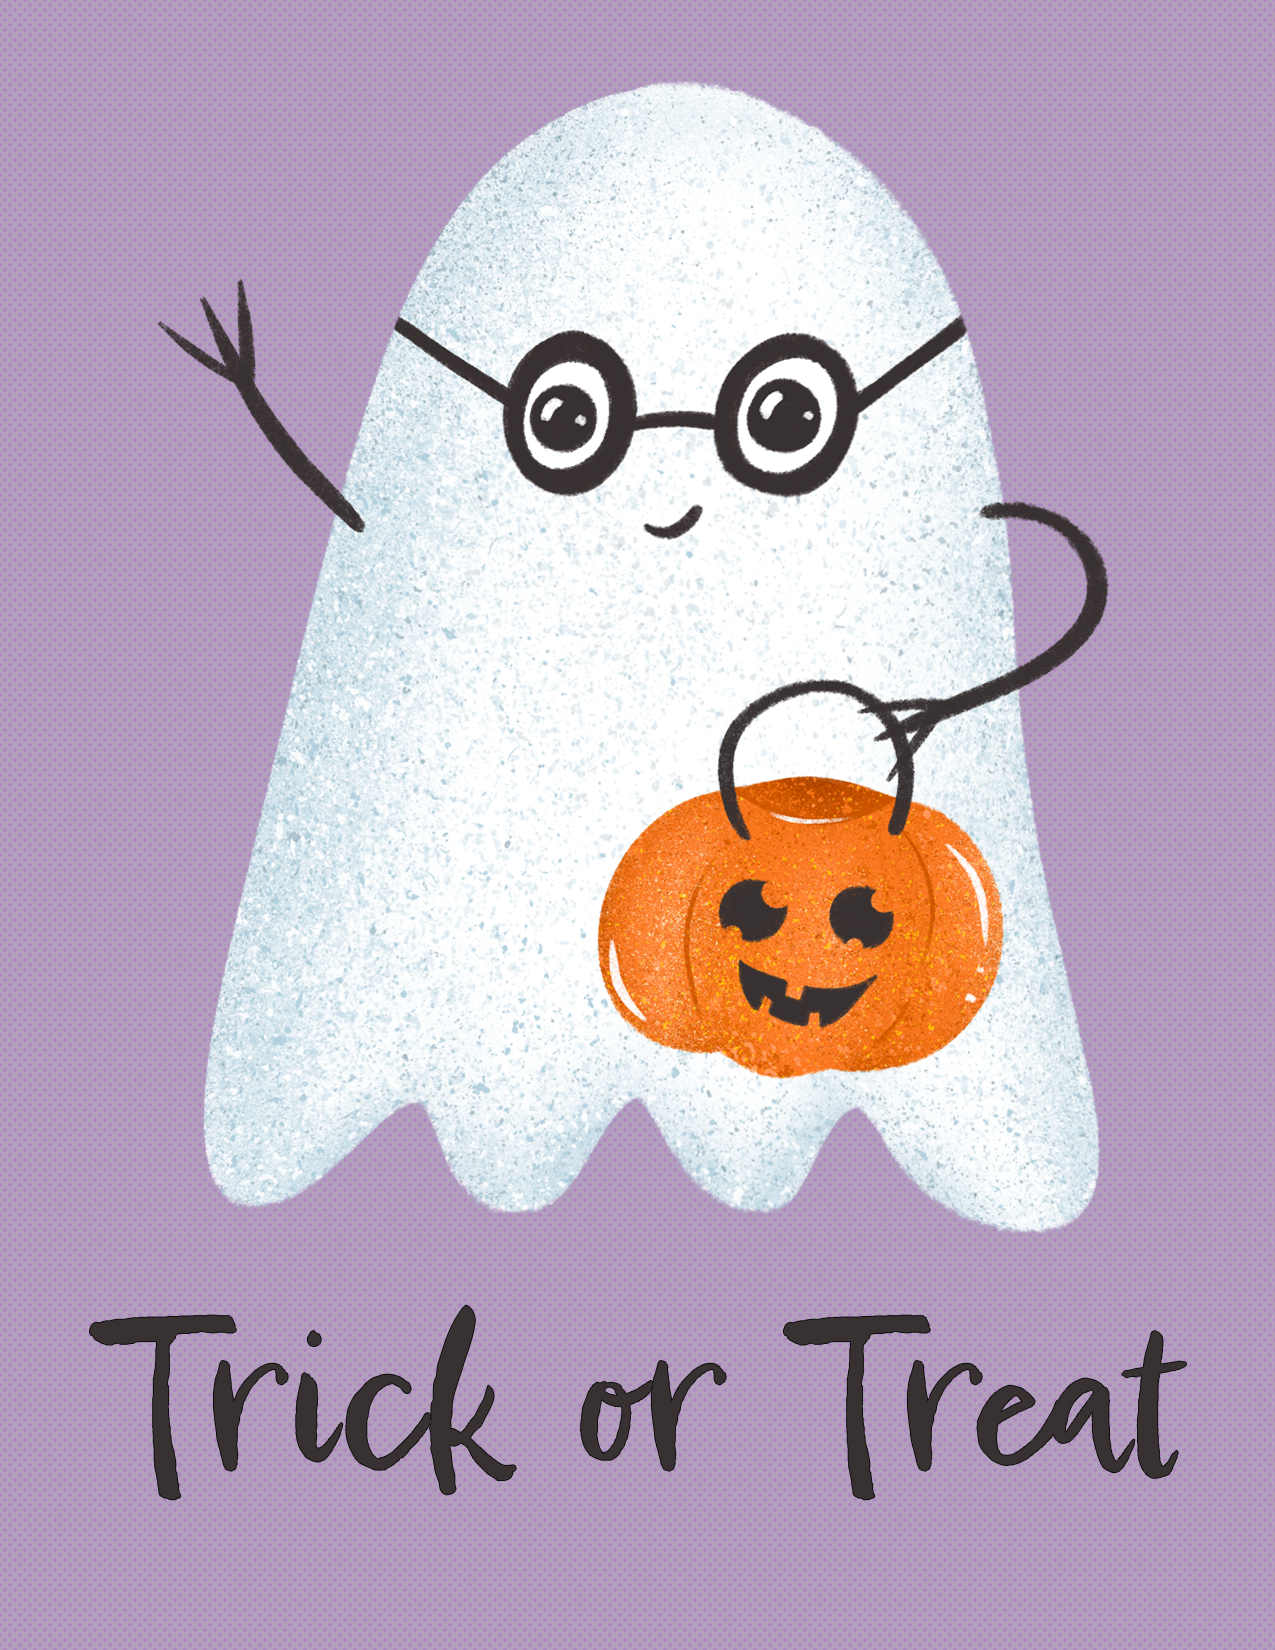 Halloweenies! (Notecards and Sticker Sheet)